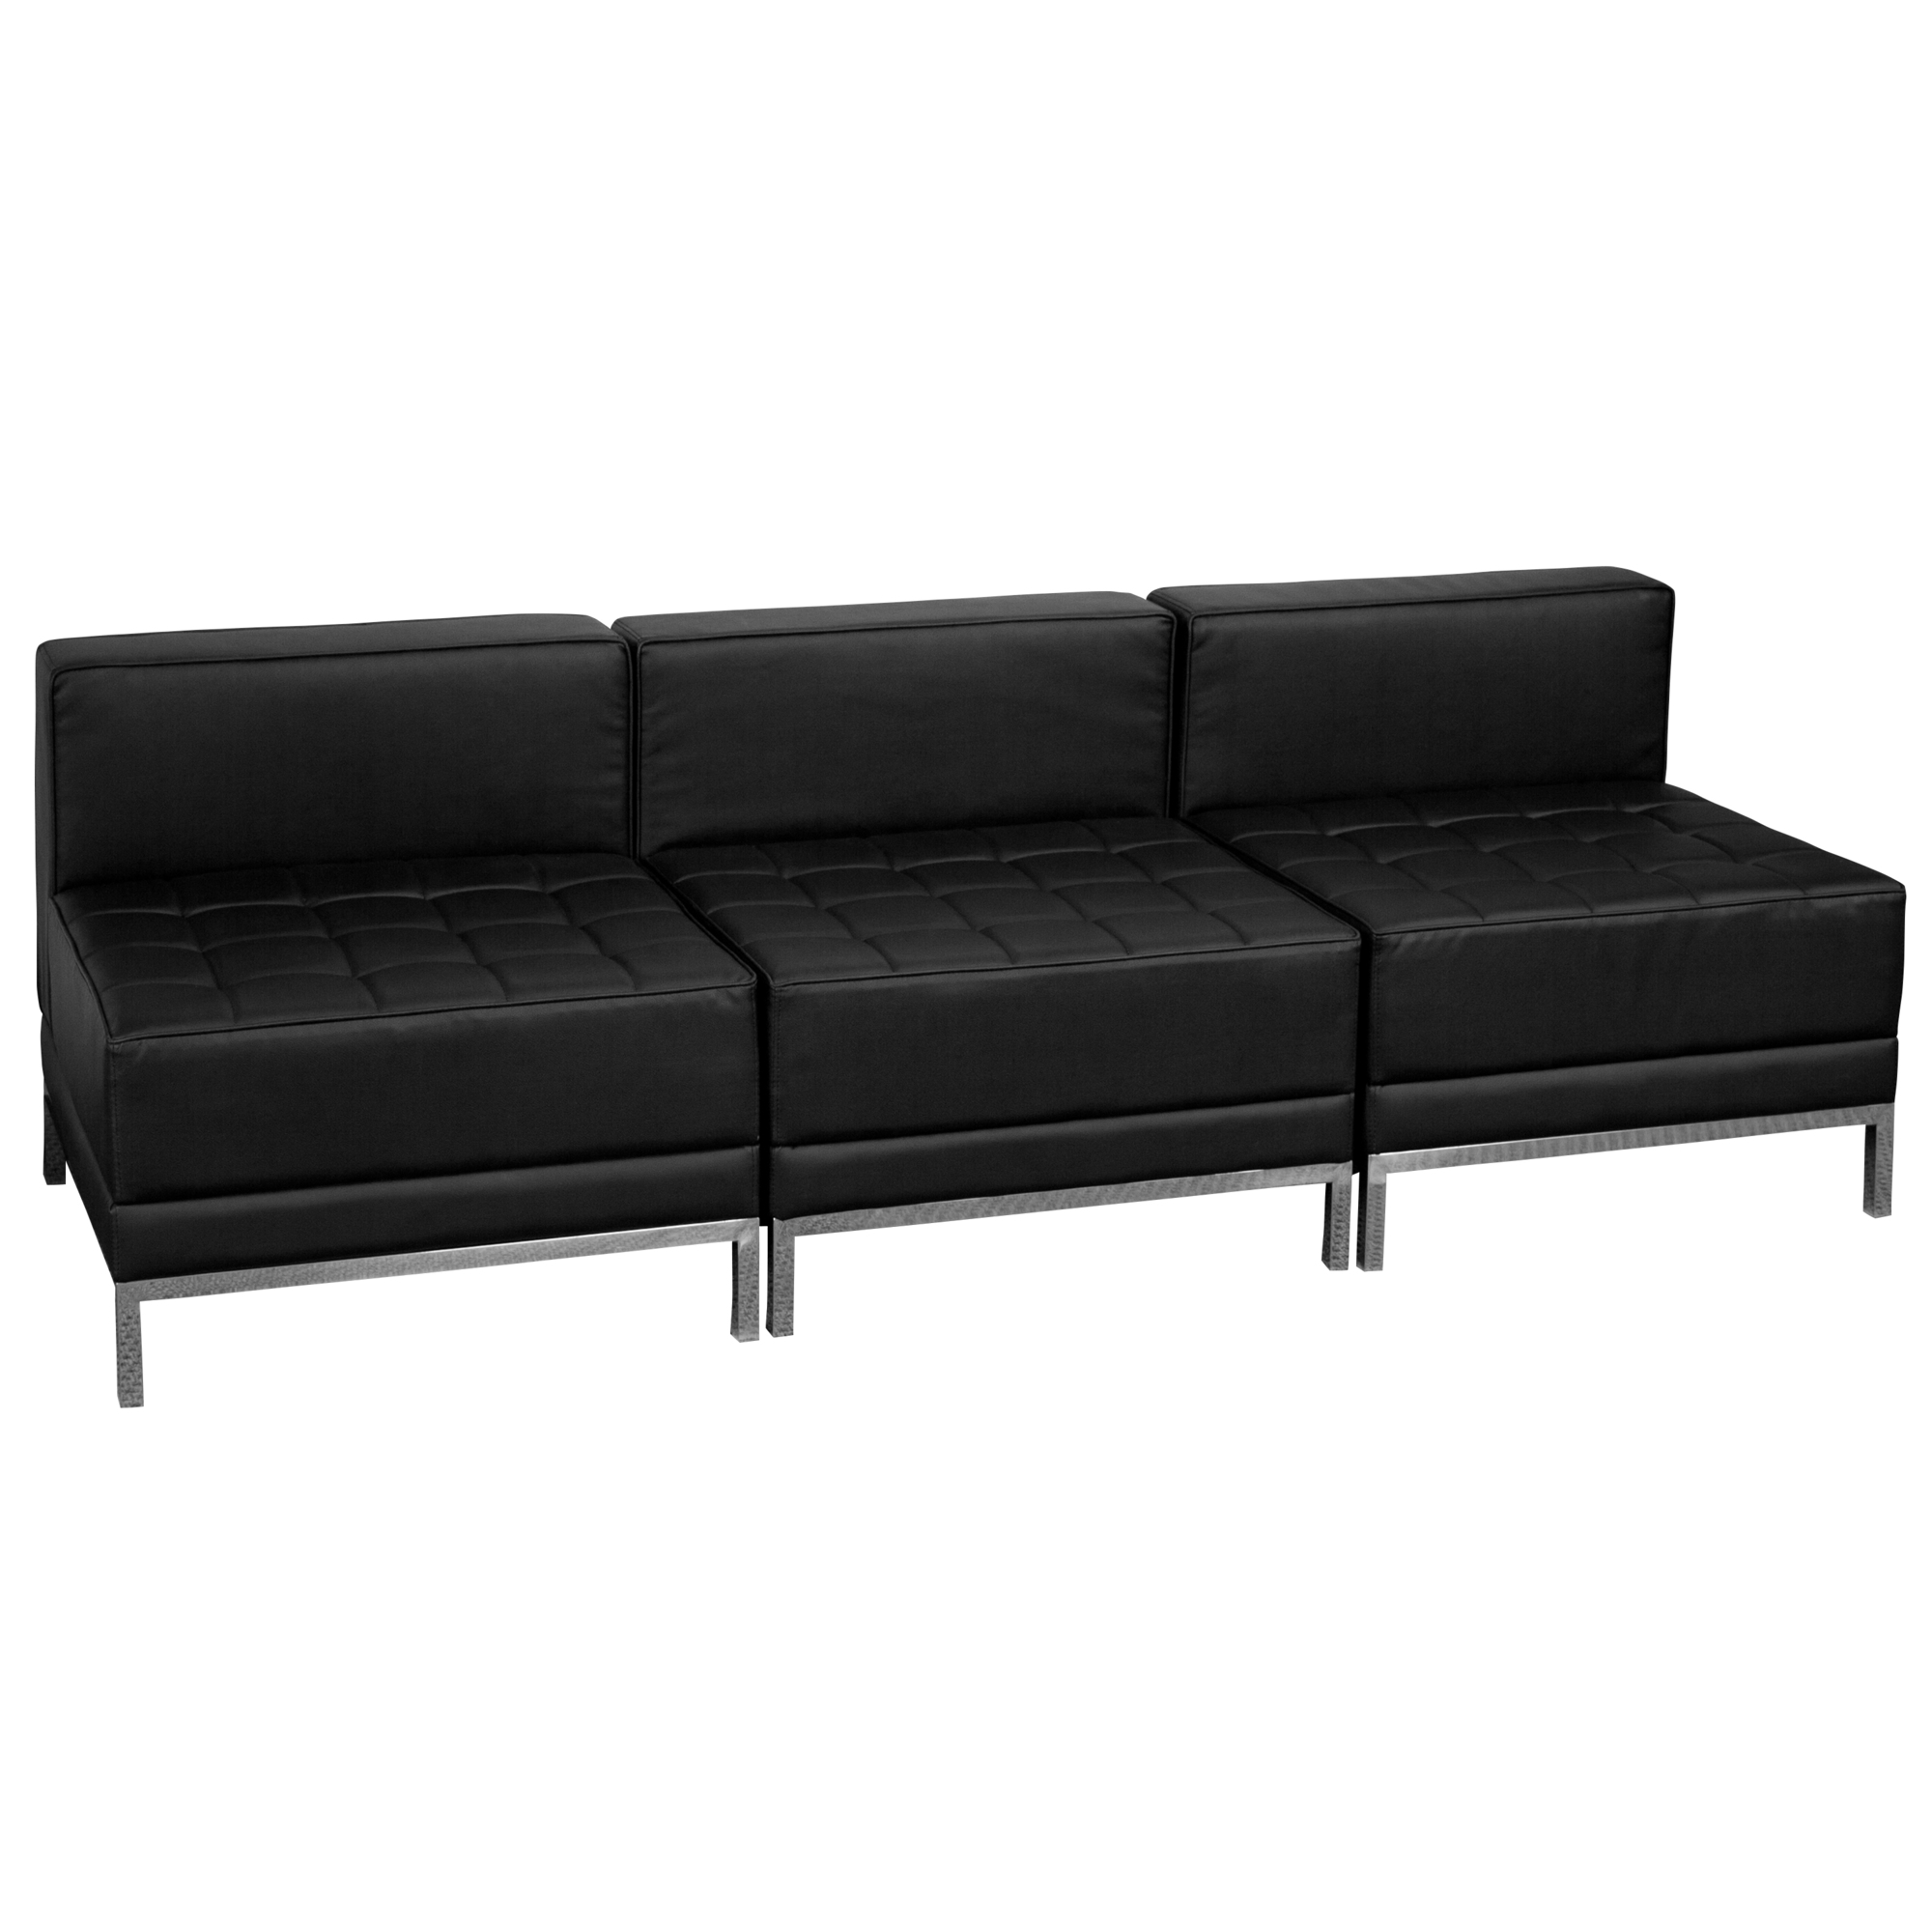 Flash Furniture, 3 Piece Black LeatherSoft Modular Lounge Set, Included (qty.) 3 Model ZBIMAGMIDCH3